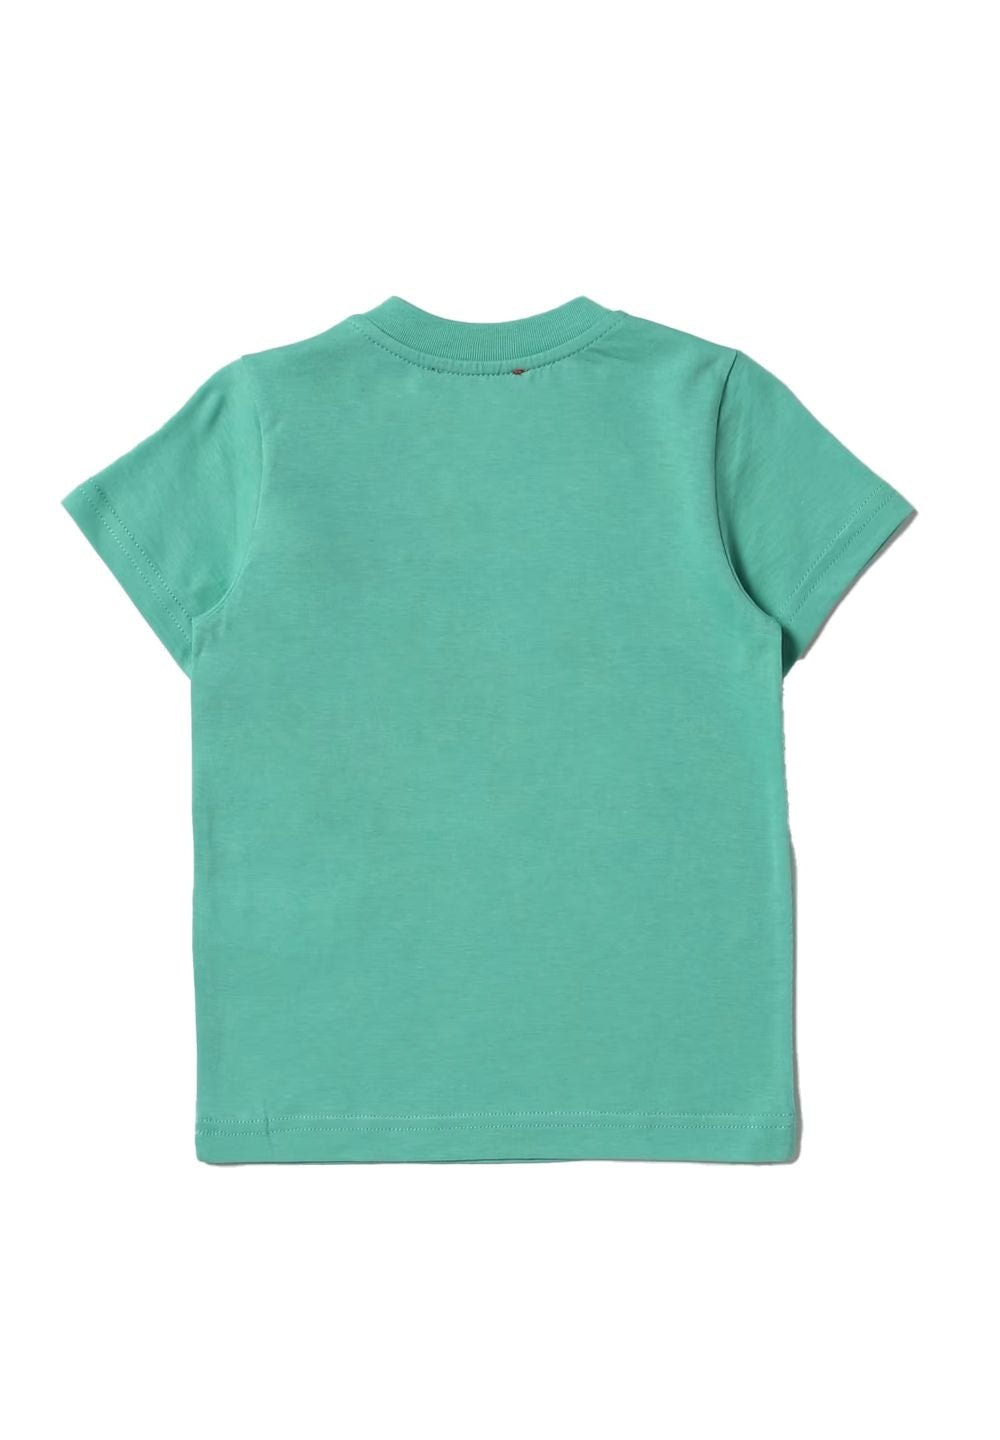 T-shirt verde per bambino